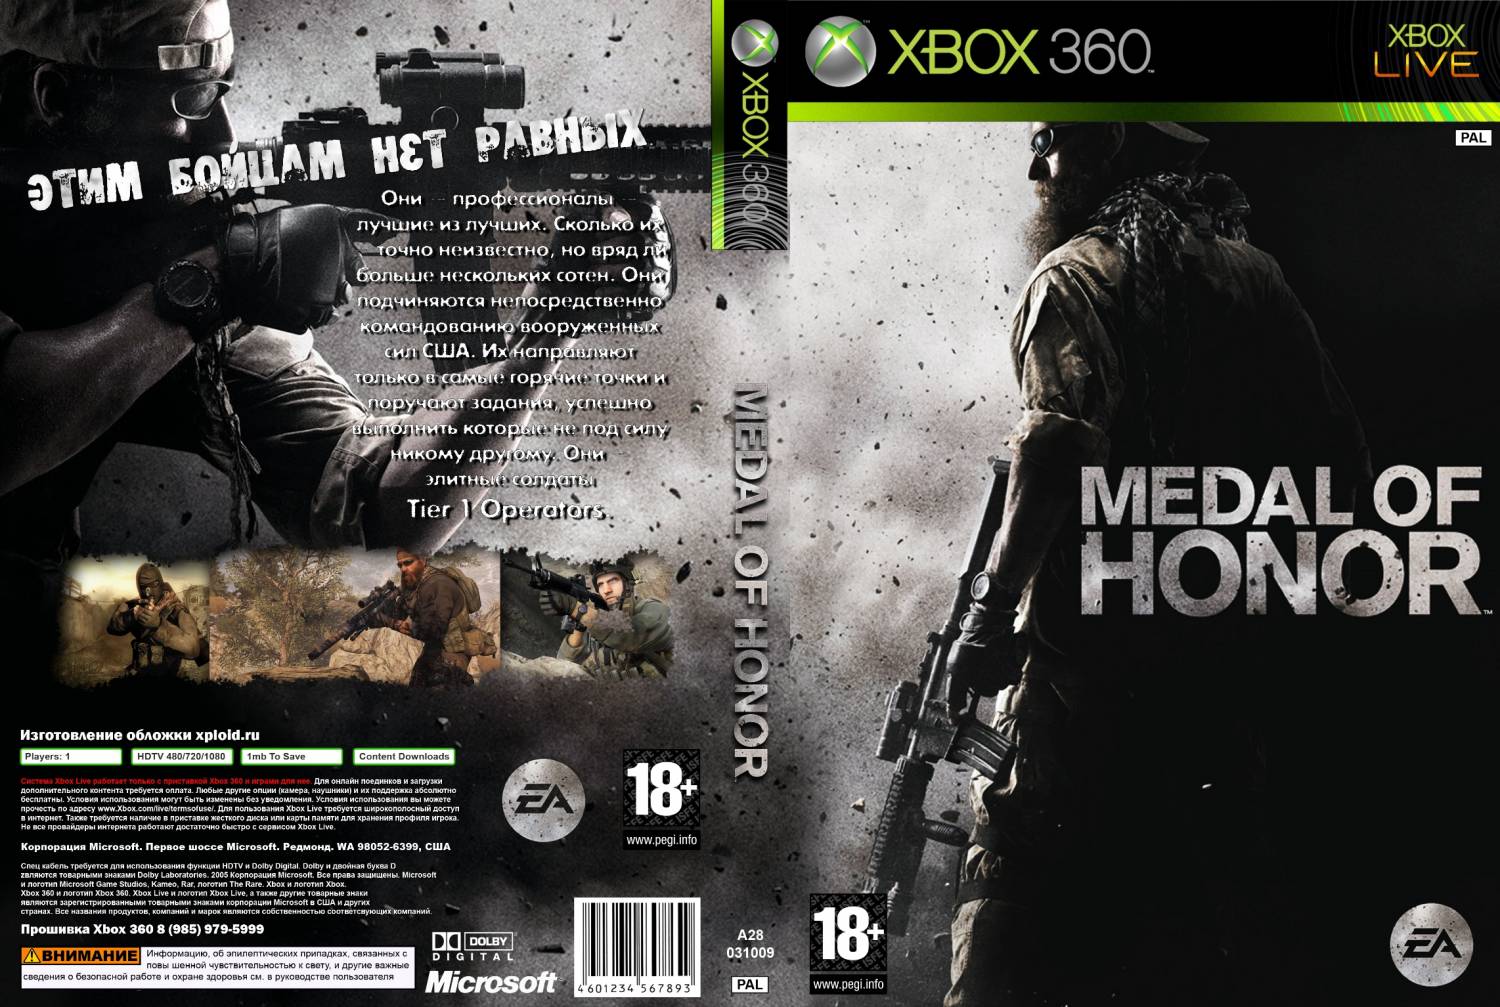 Medal of honor 360. Medal of Honor Xbox 360 обложка. Medal of Honor 2010 обложка. Медаль оф хонор на Икс бокс 360. Medal of Honor 2010 Xbox 360 обложка.